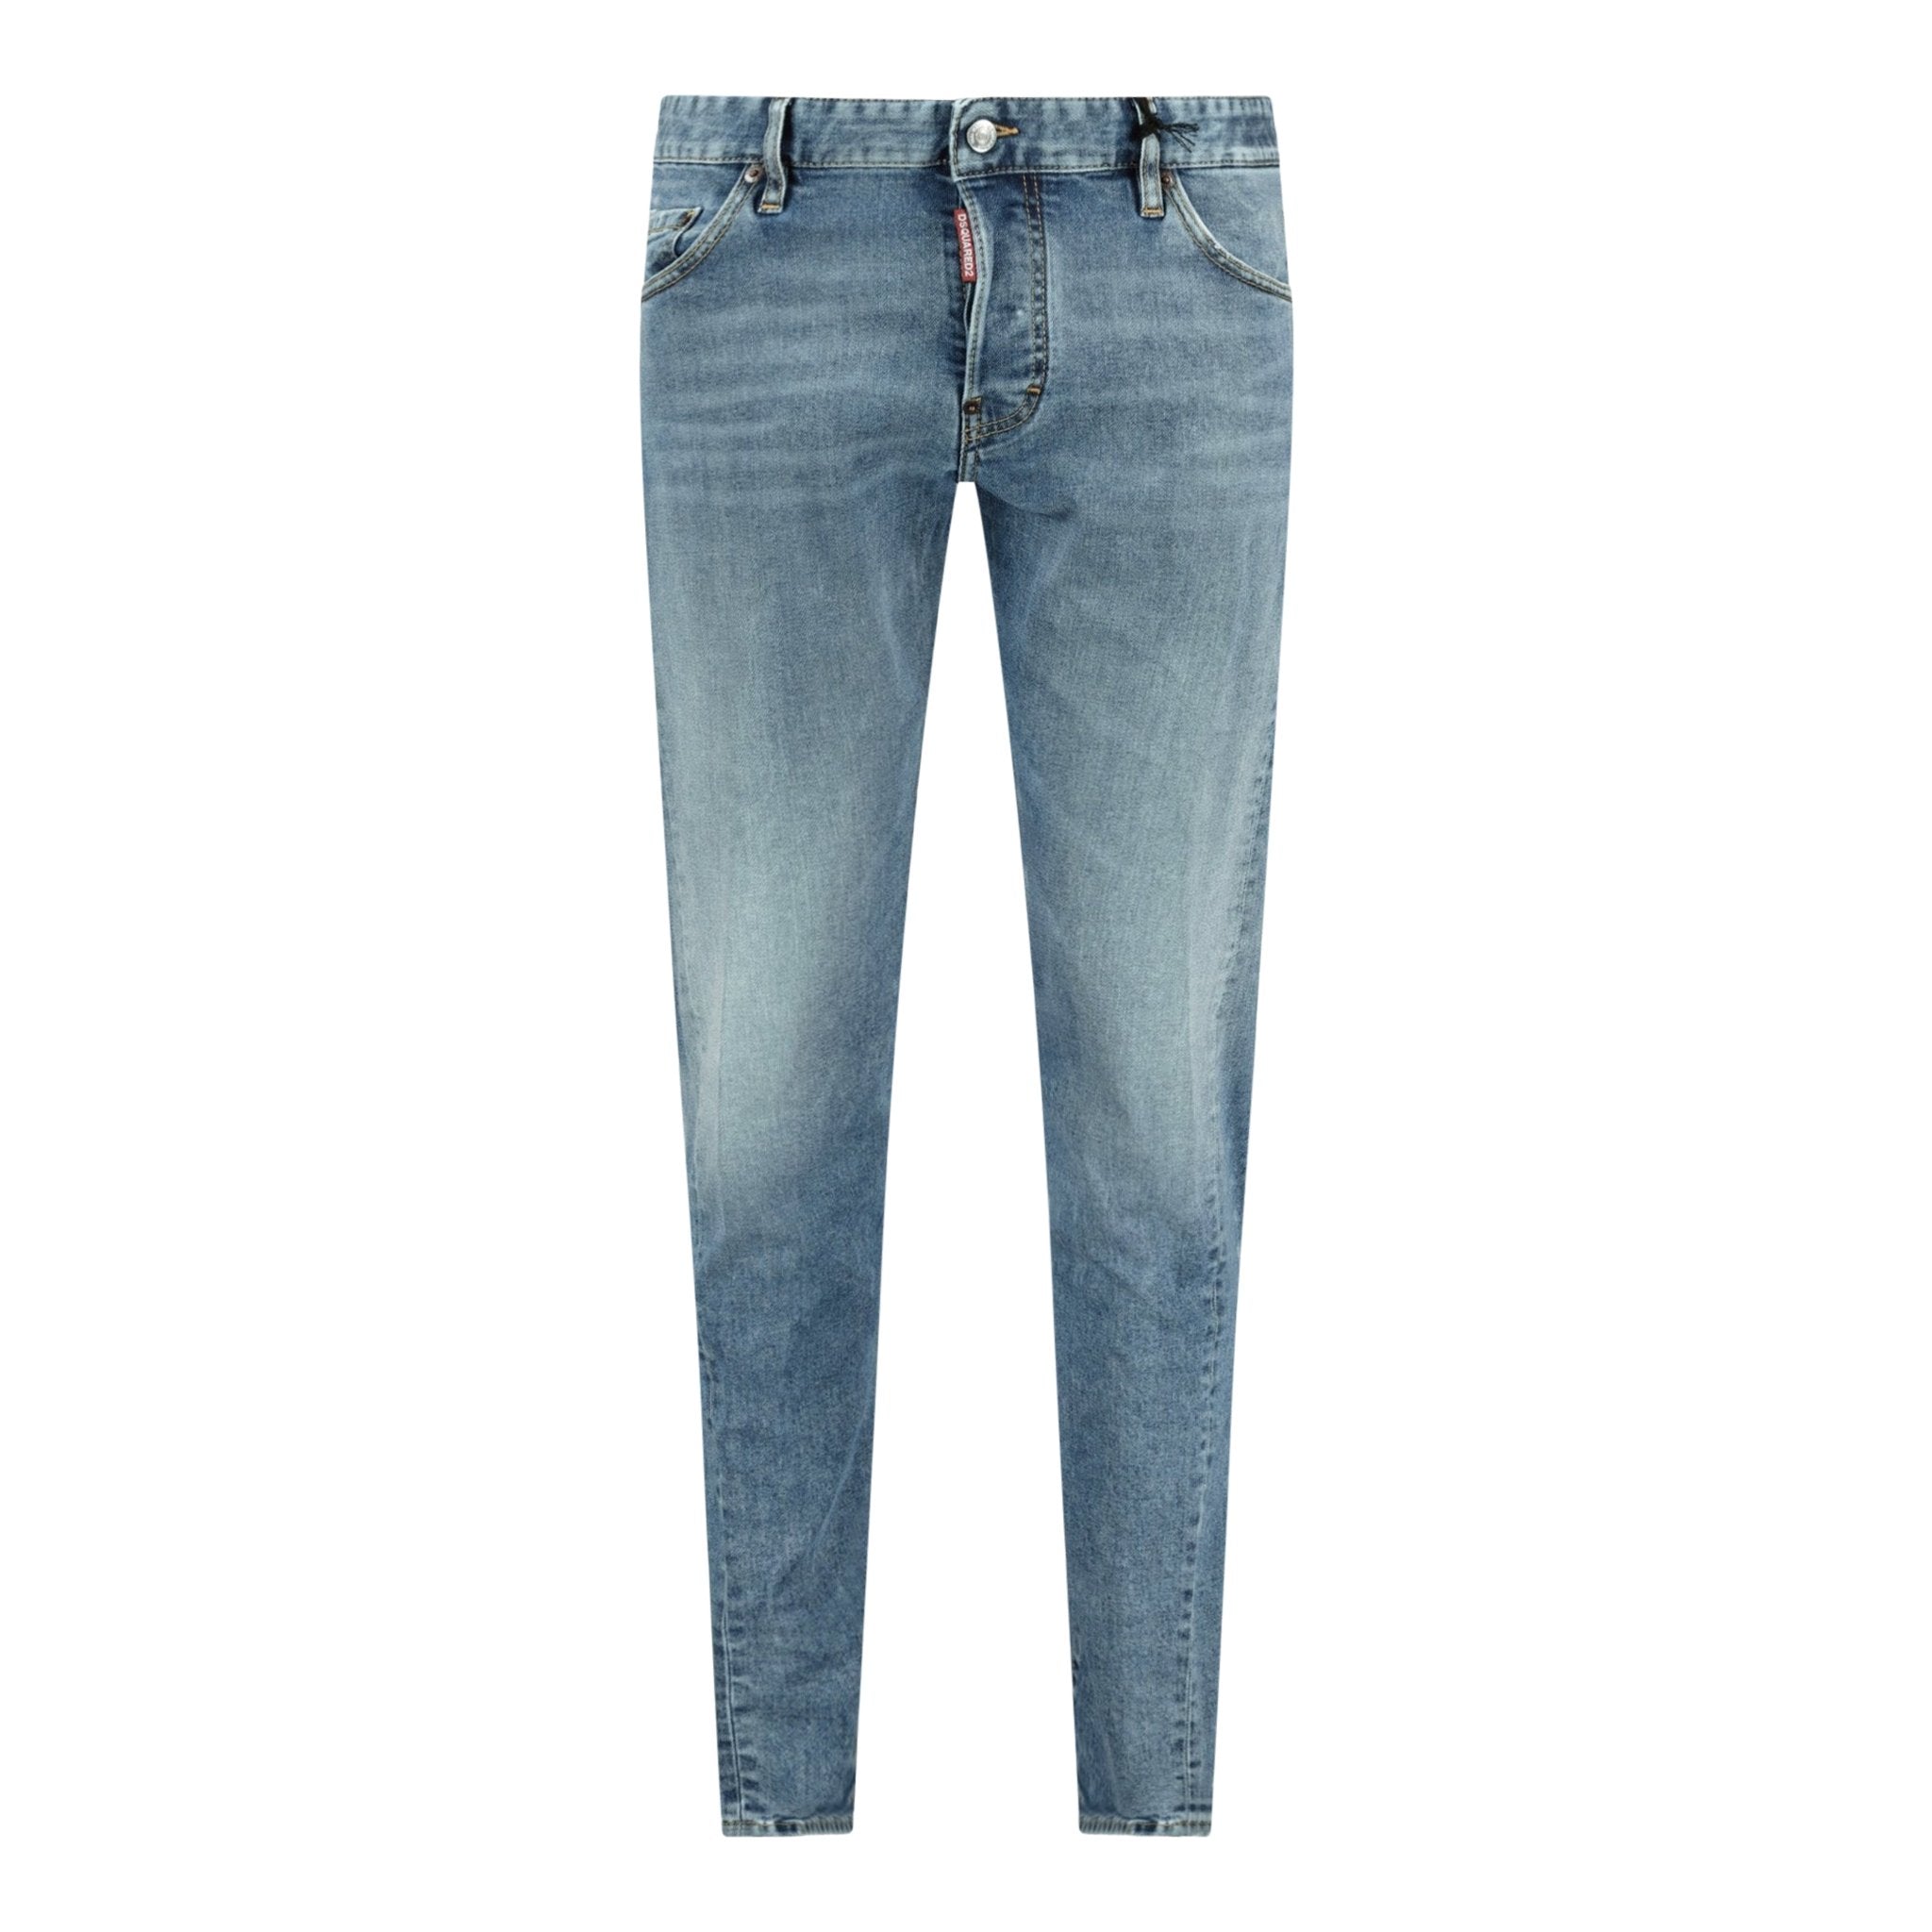 DSquared2 'Sexy Twist' Light Blue Slim Fit Jeans - Boinclo ltd